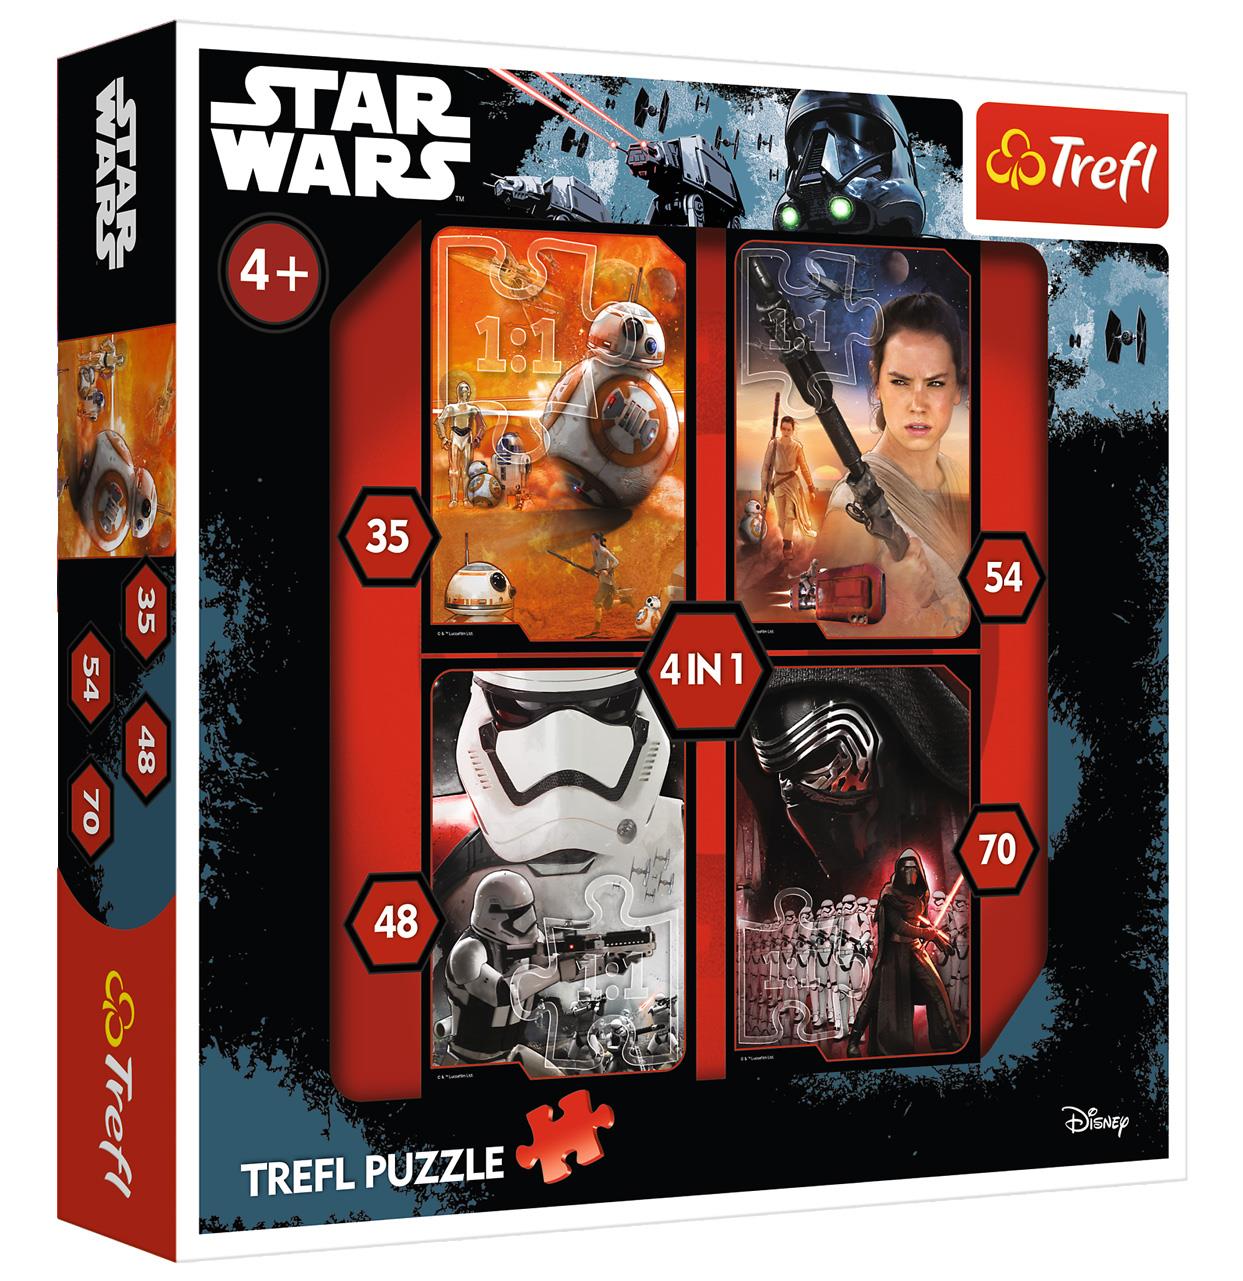 Trefl Çocuk Puzzle 34263 Star Wars Episode VII: Force Awakens 35+48+54+70 Parça 4 in 1 Puzzle